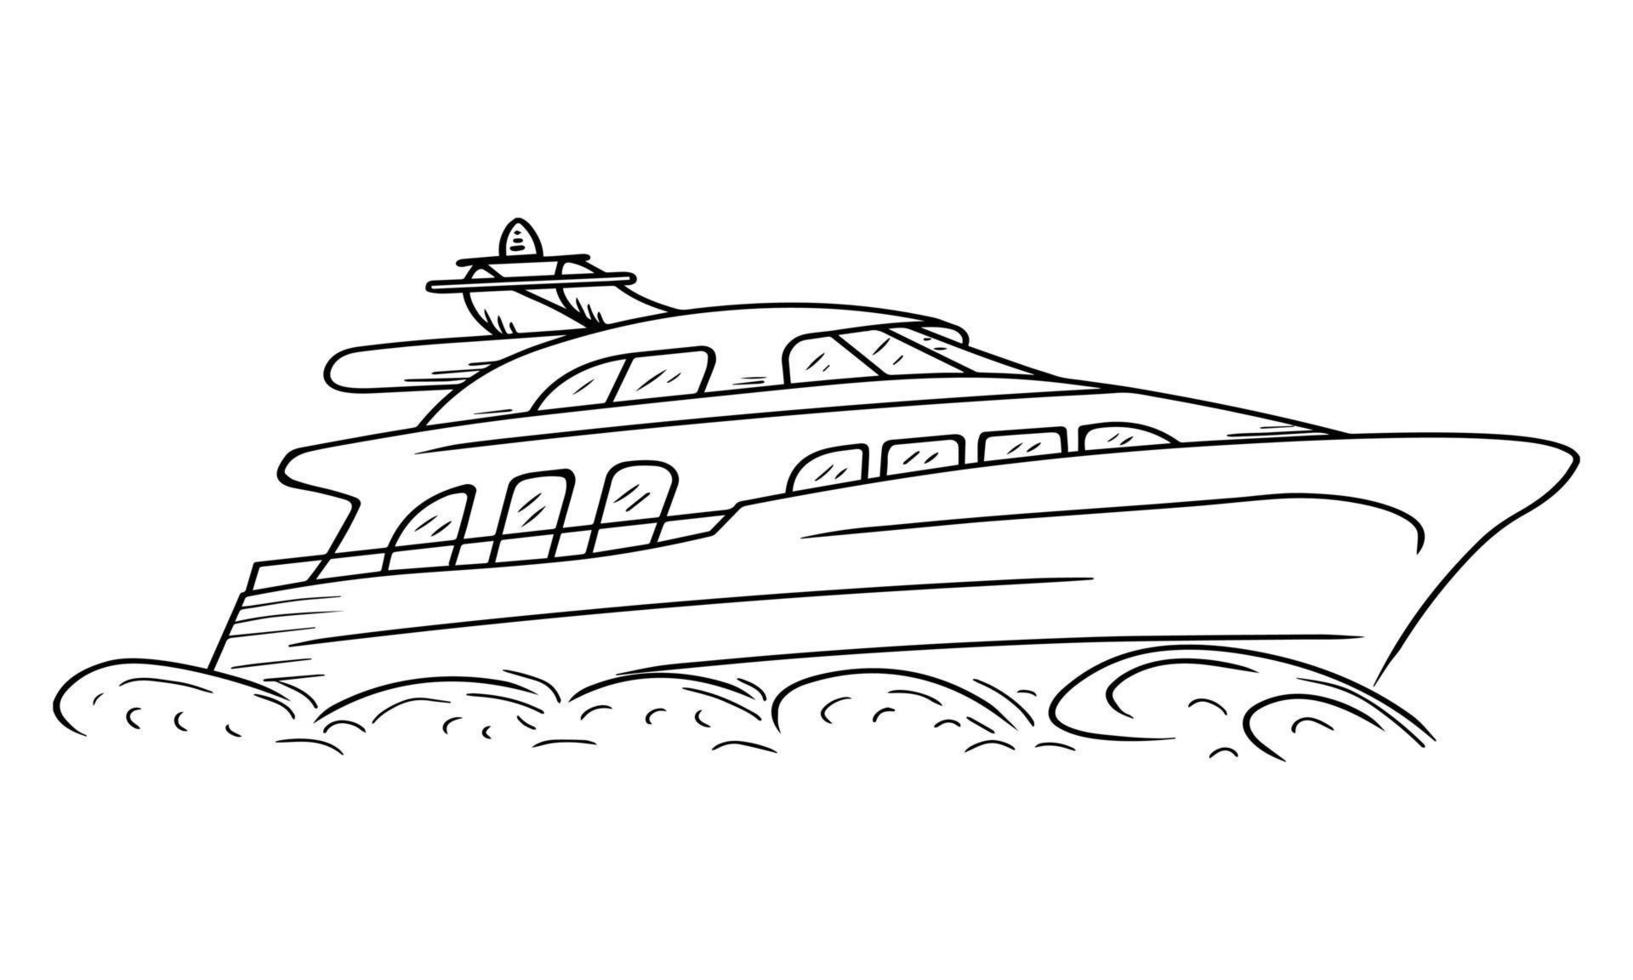 Yacht. handritade doodle yacht vektor